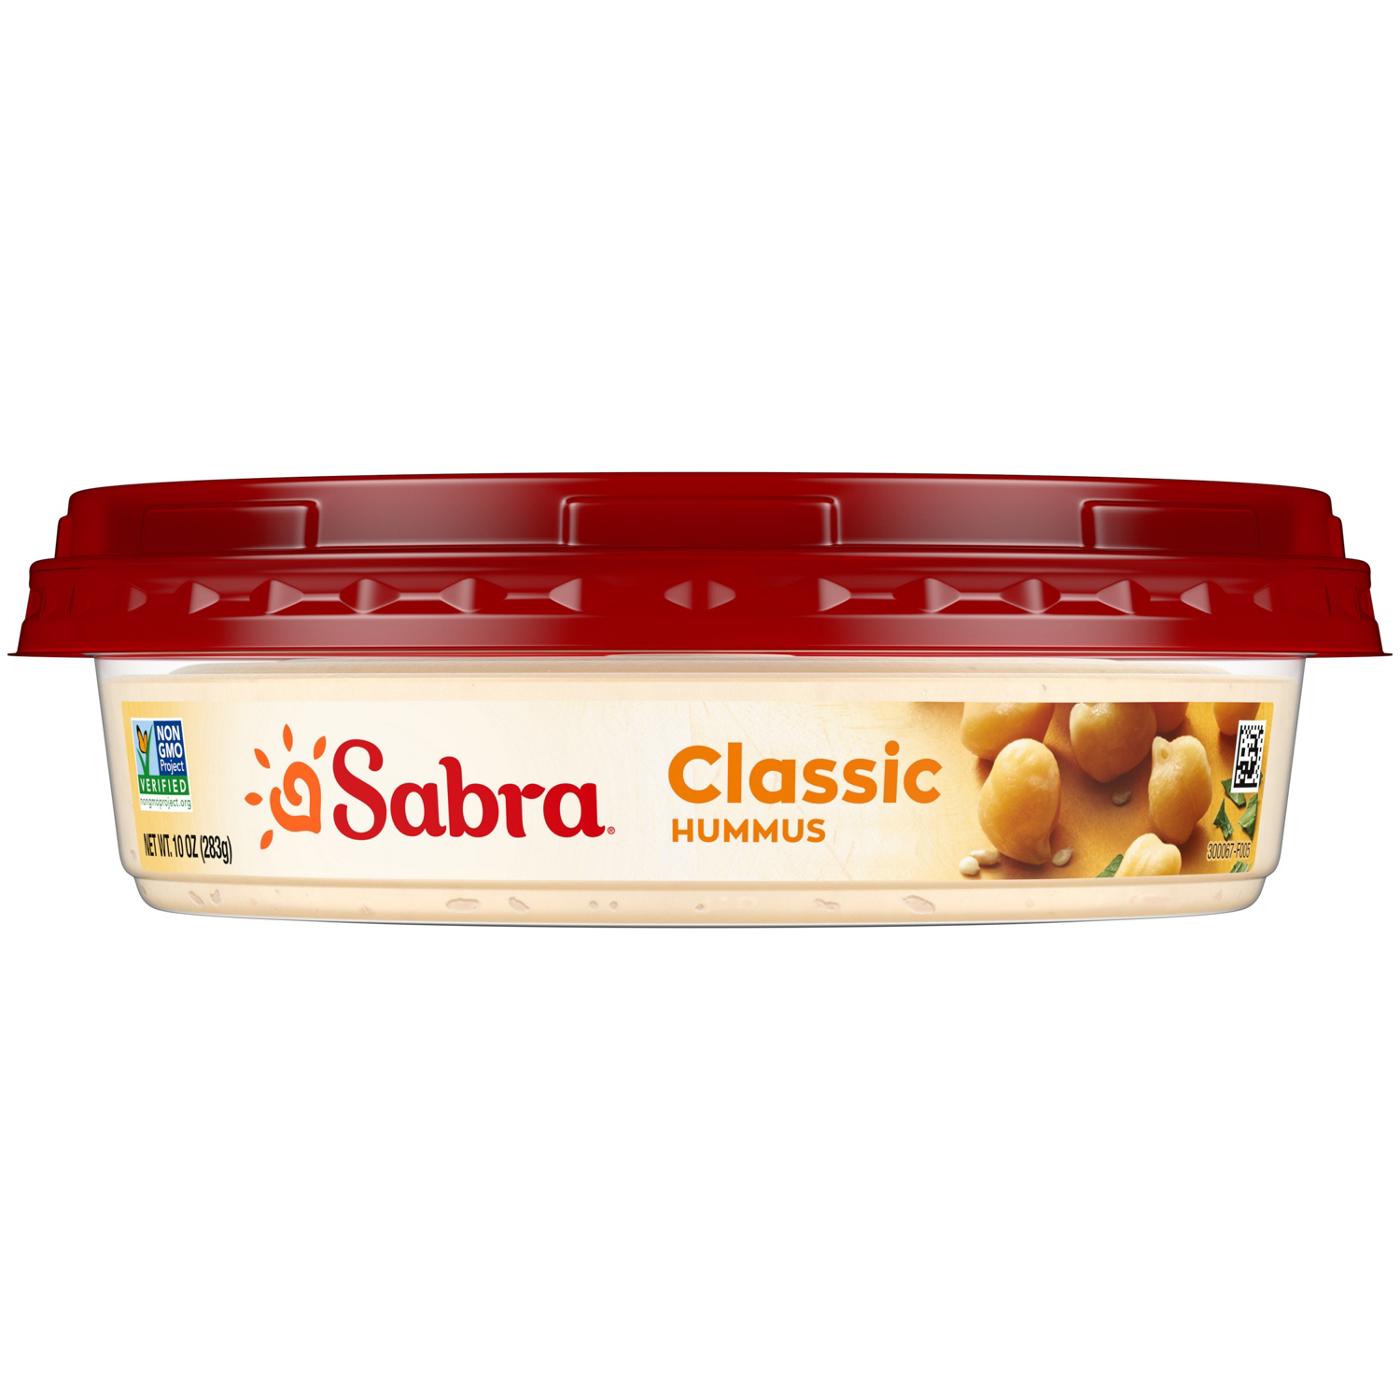 Sabra Classic Hummus; image 6 of 7